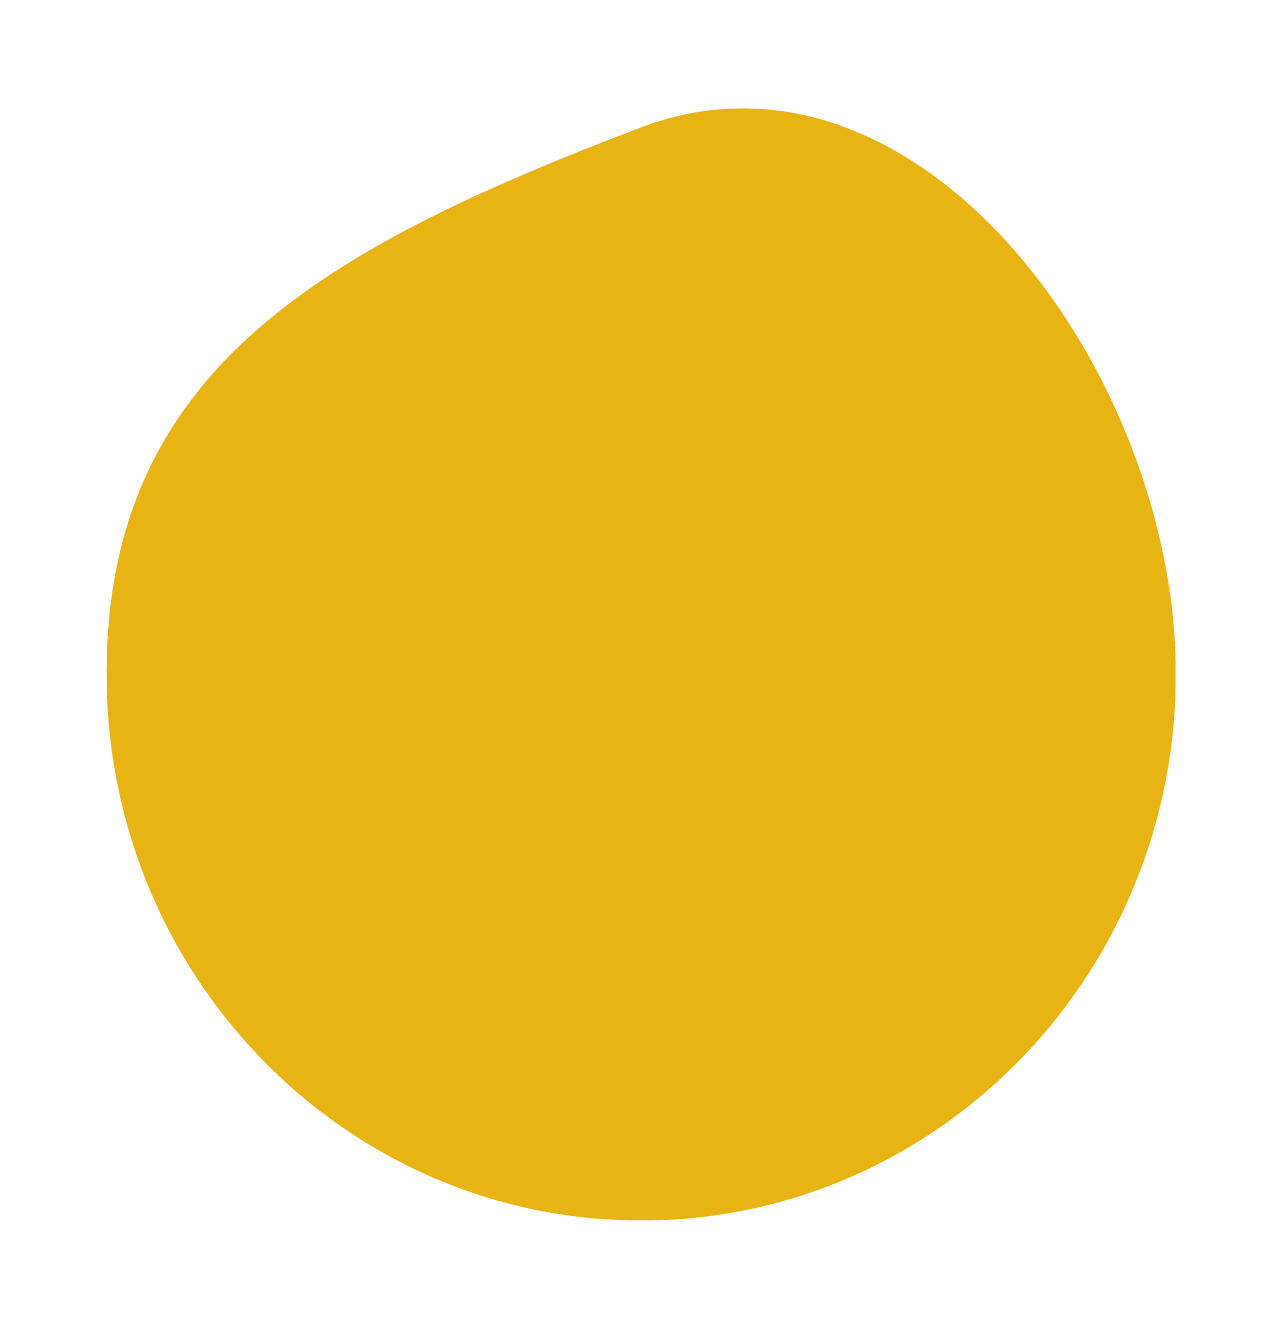 Blob_yellow-01